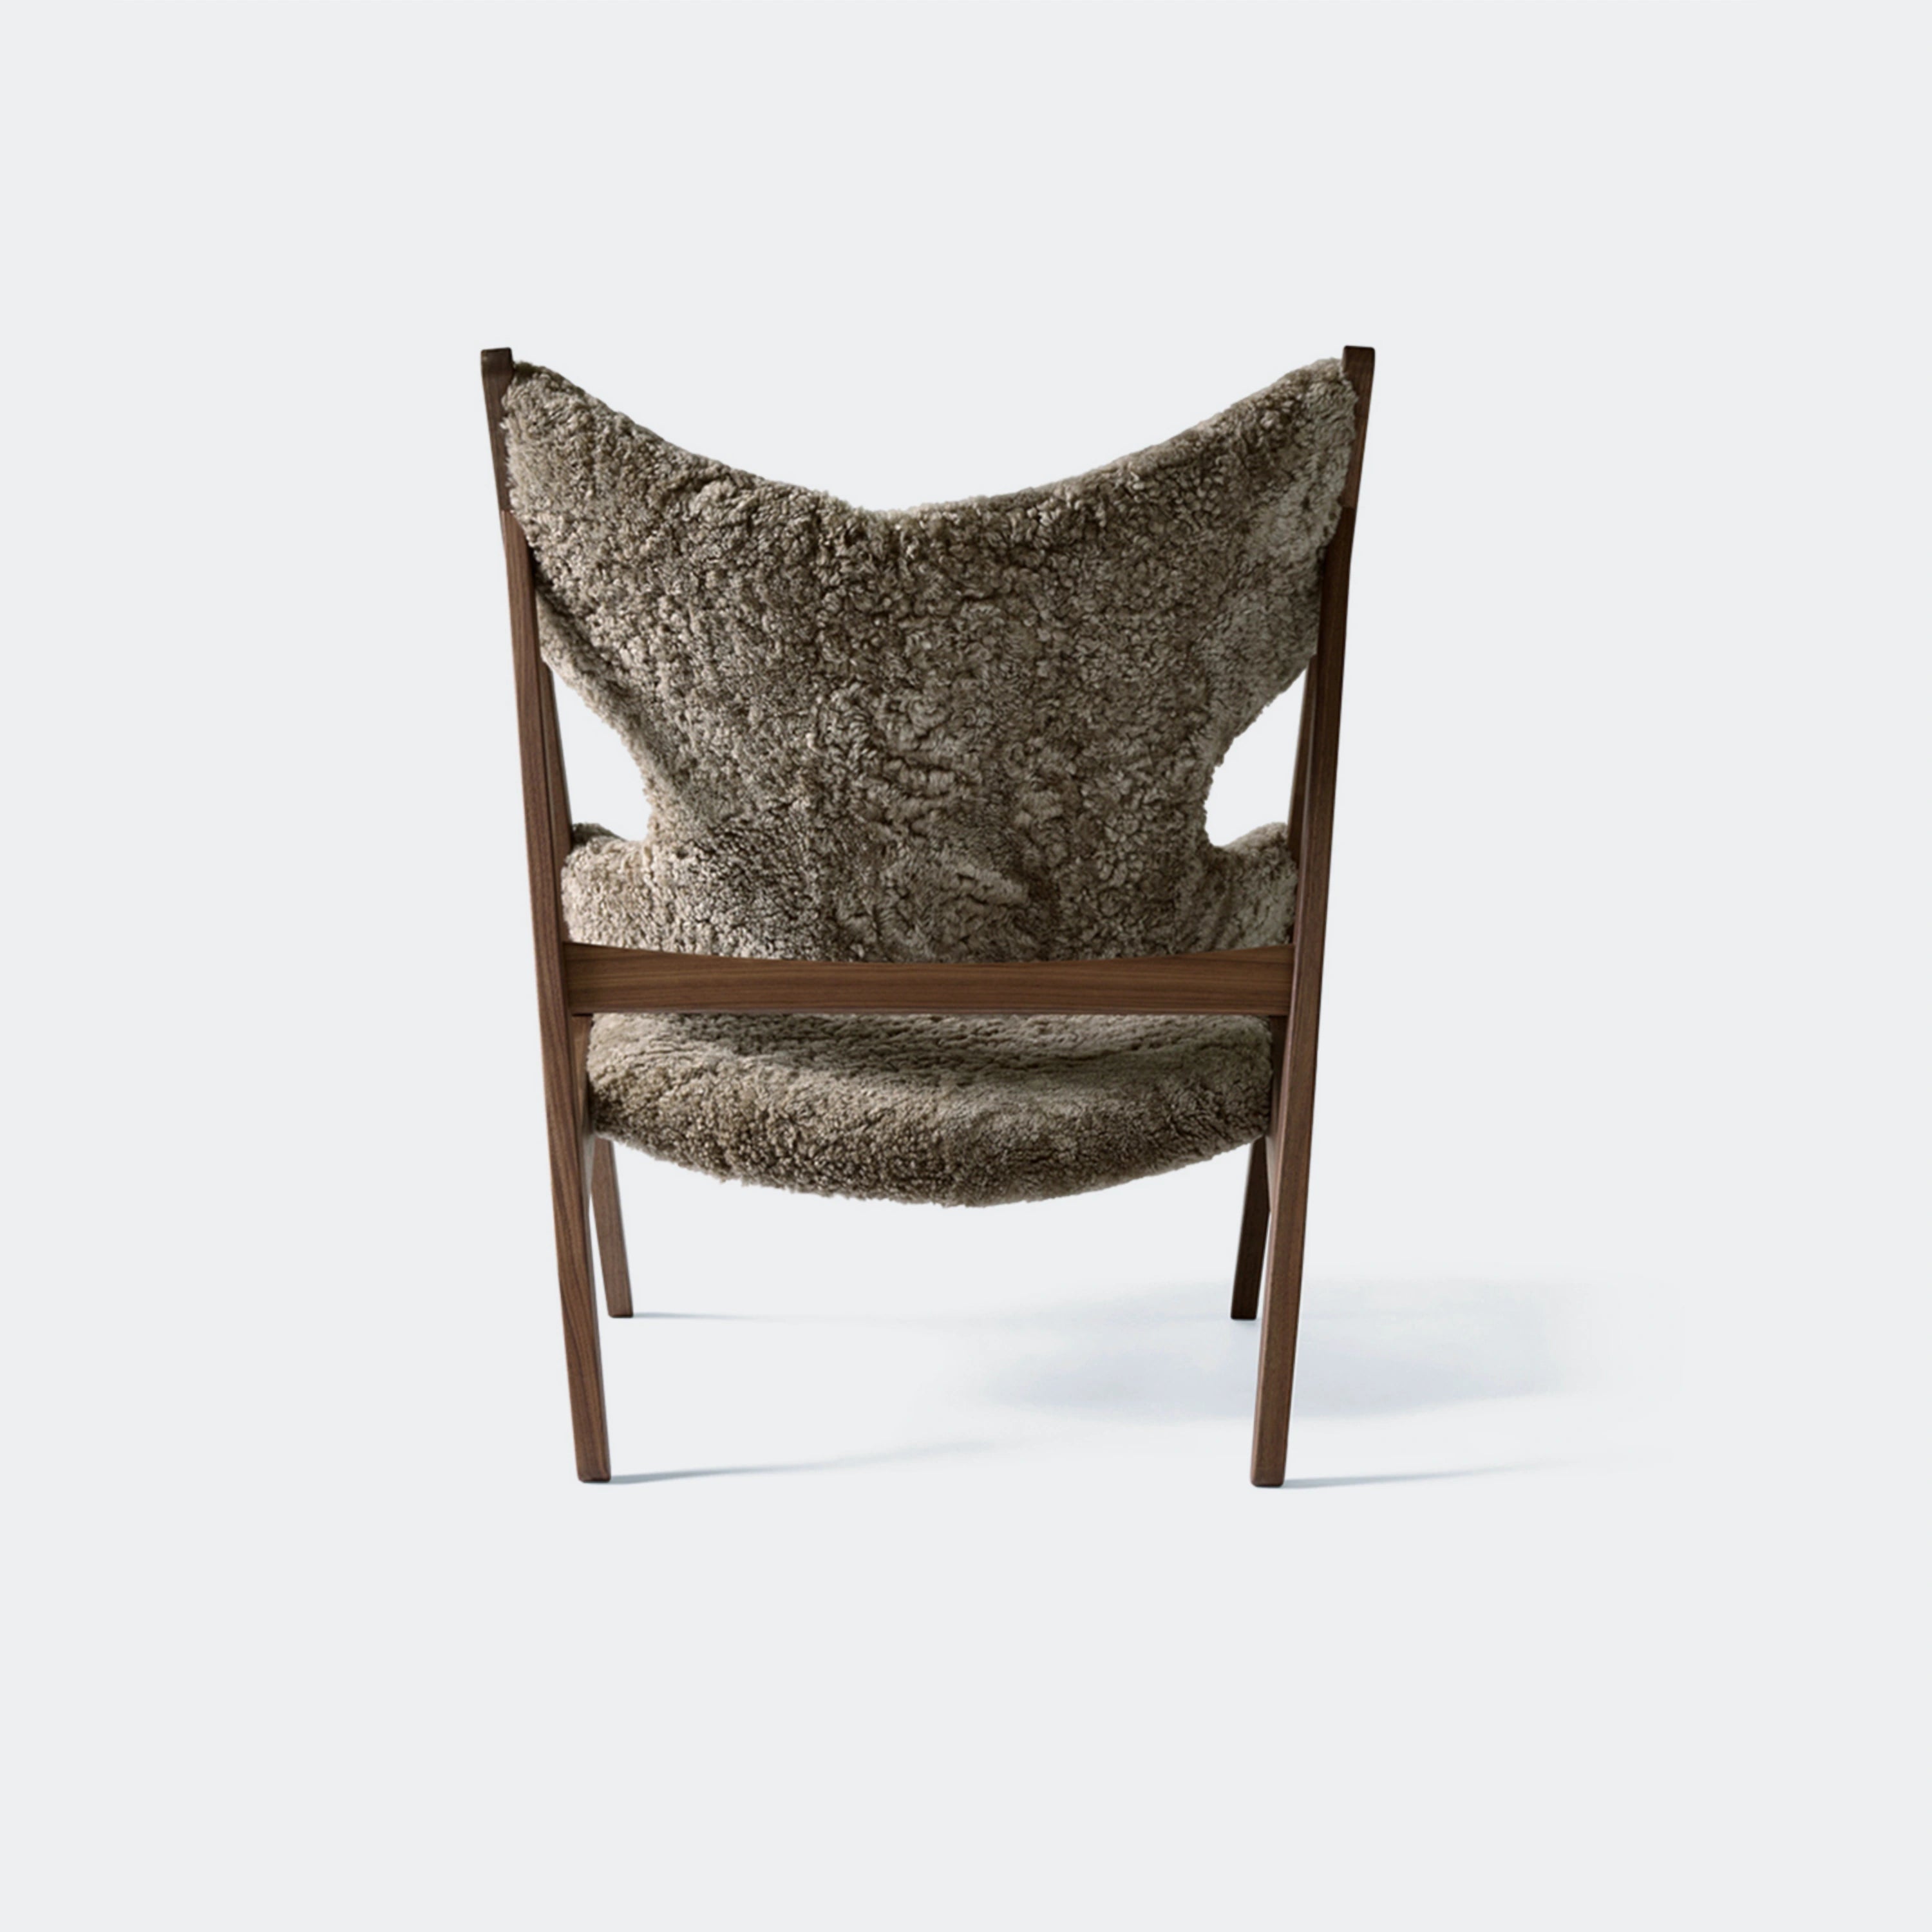 Audo Copenhagen Knitting Chair, Sheepskin Upholstery Made To Order Walnut/Sahara - KANSO#Frame/Fabric Color_Walnut/Sahara